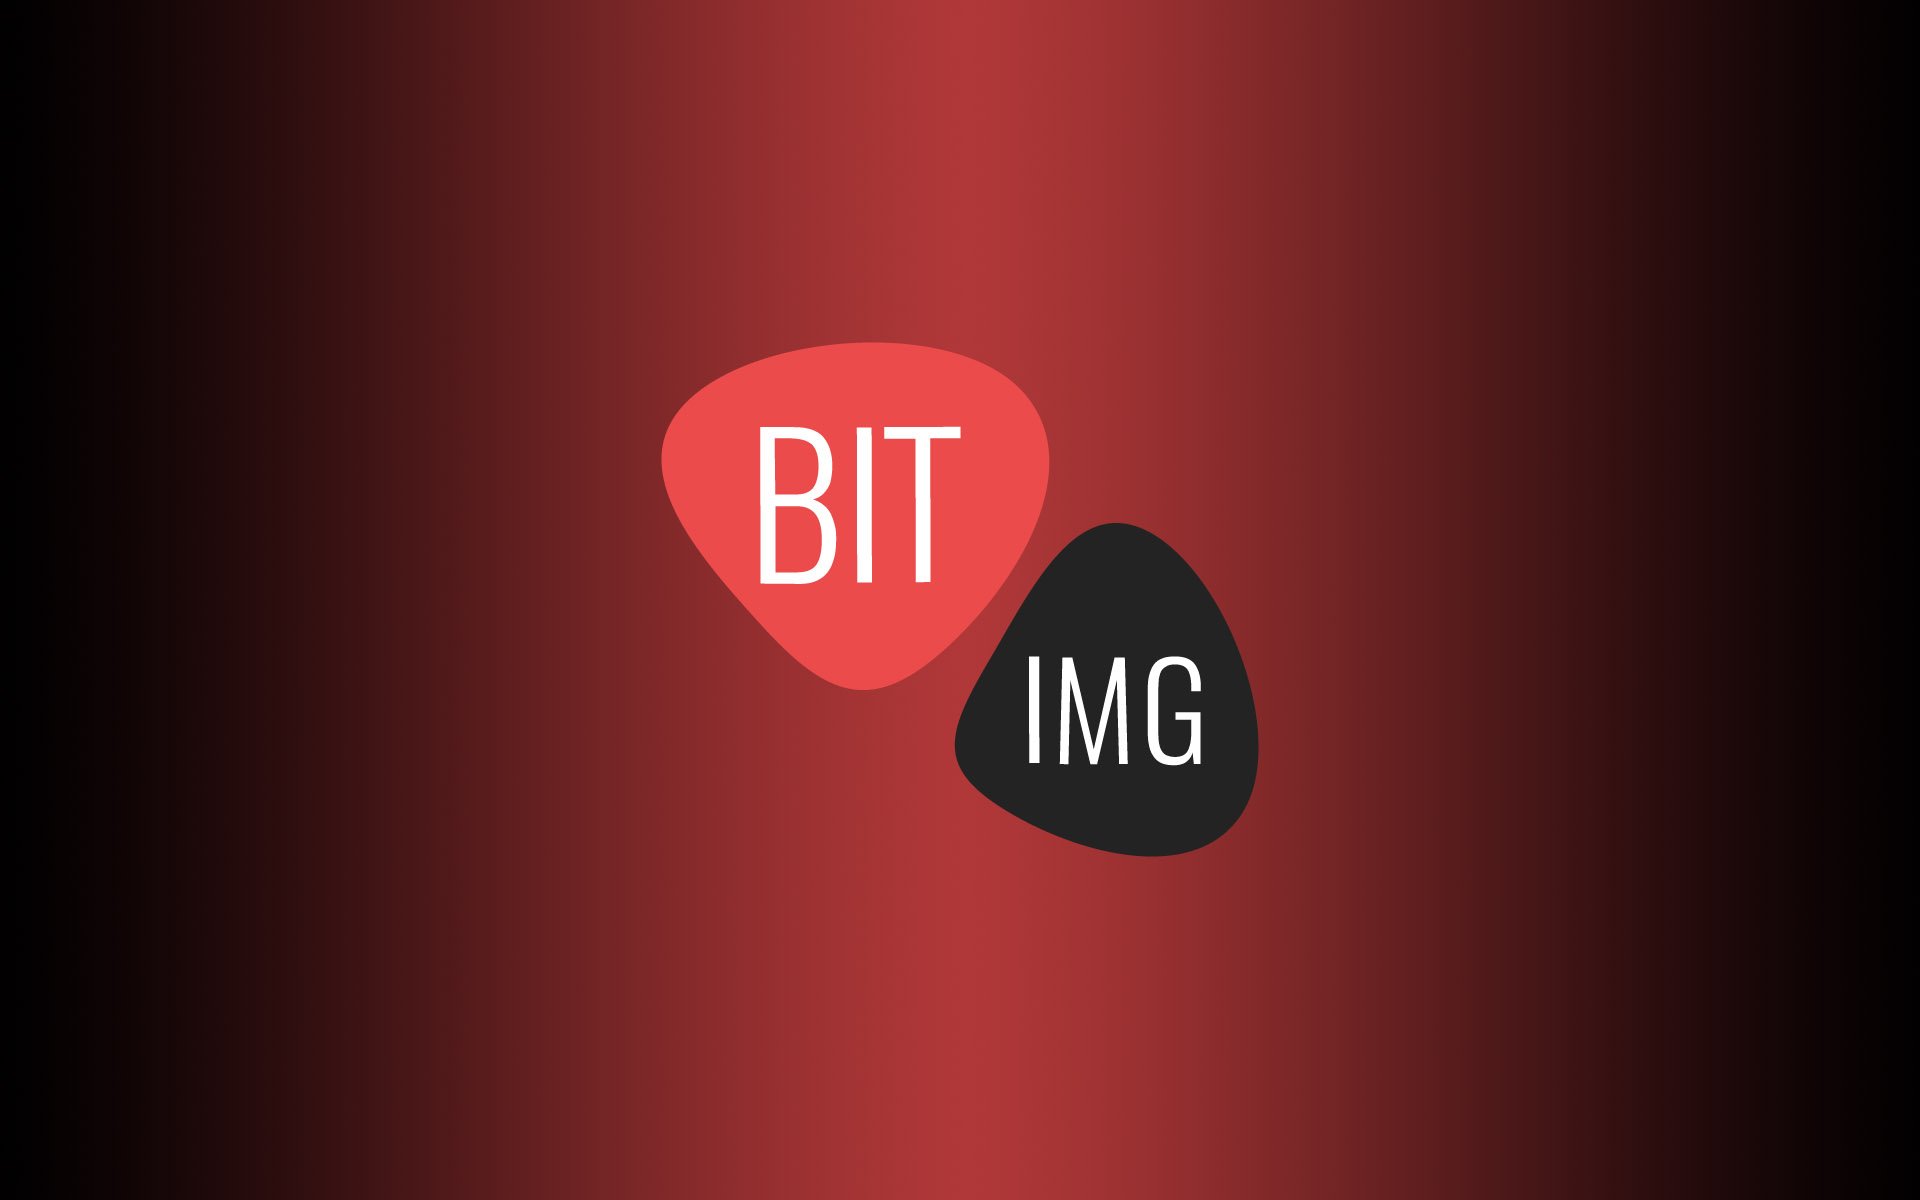 BitImage: Innovating $200B Industry of Digital Content